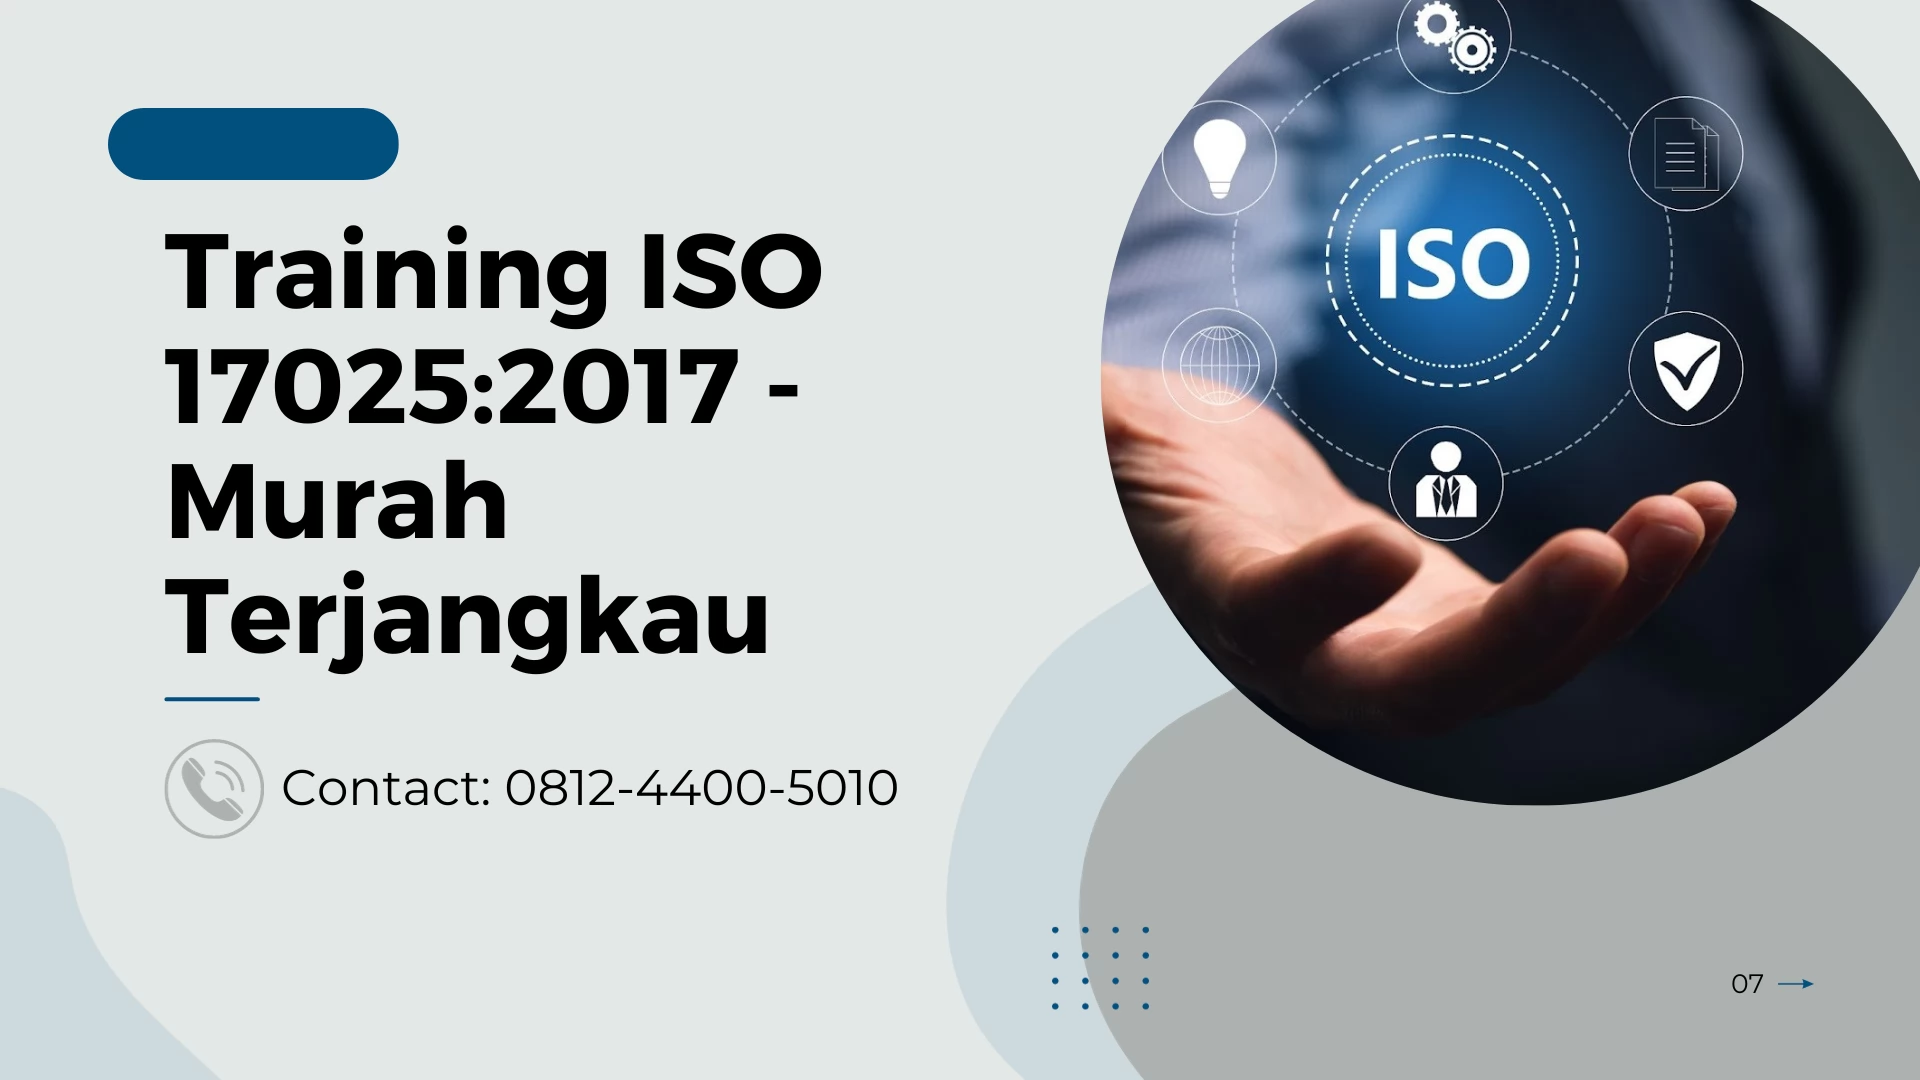 Training ISO 17025:2017 - Murah Terjangkau